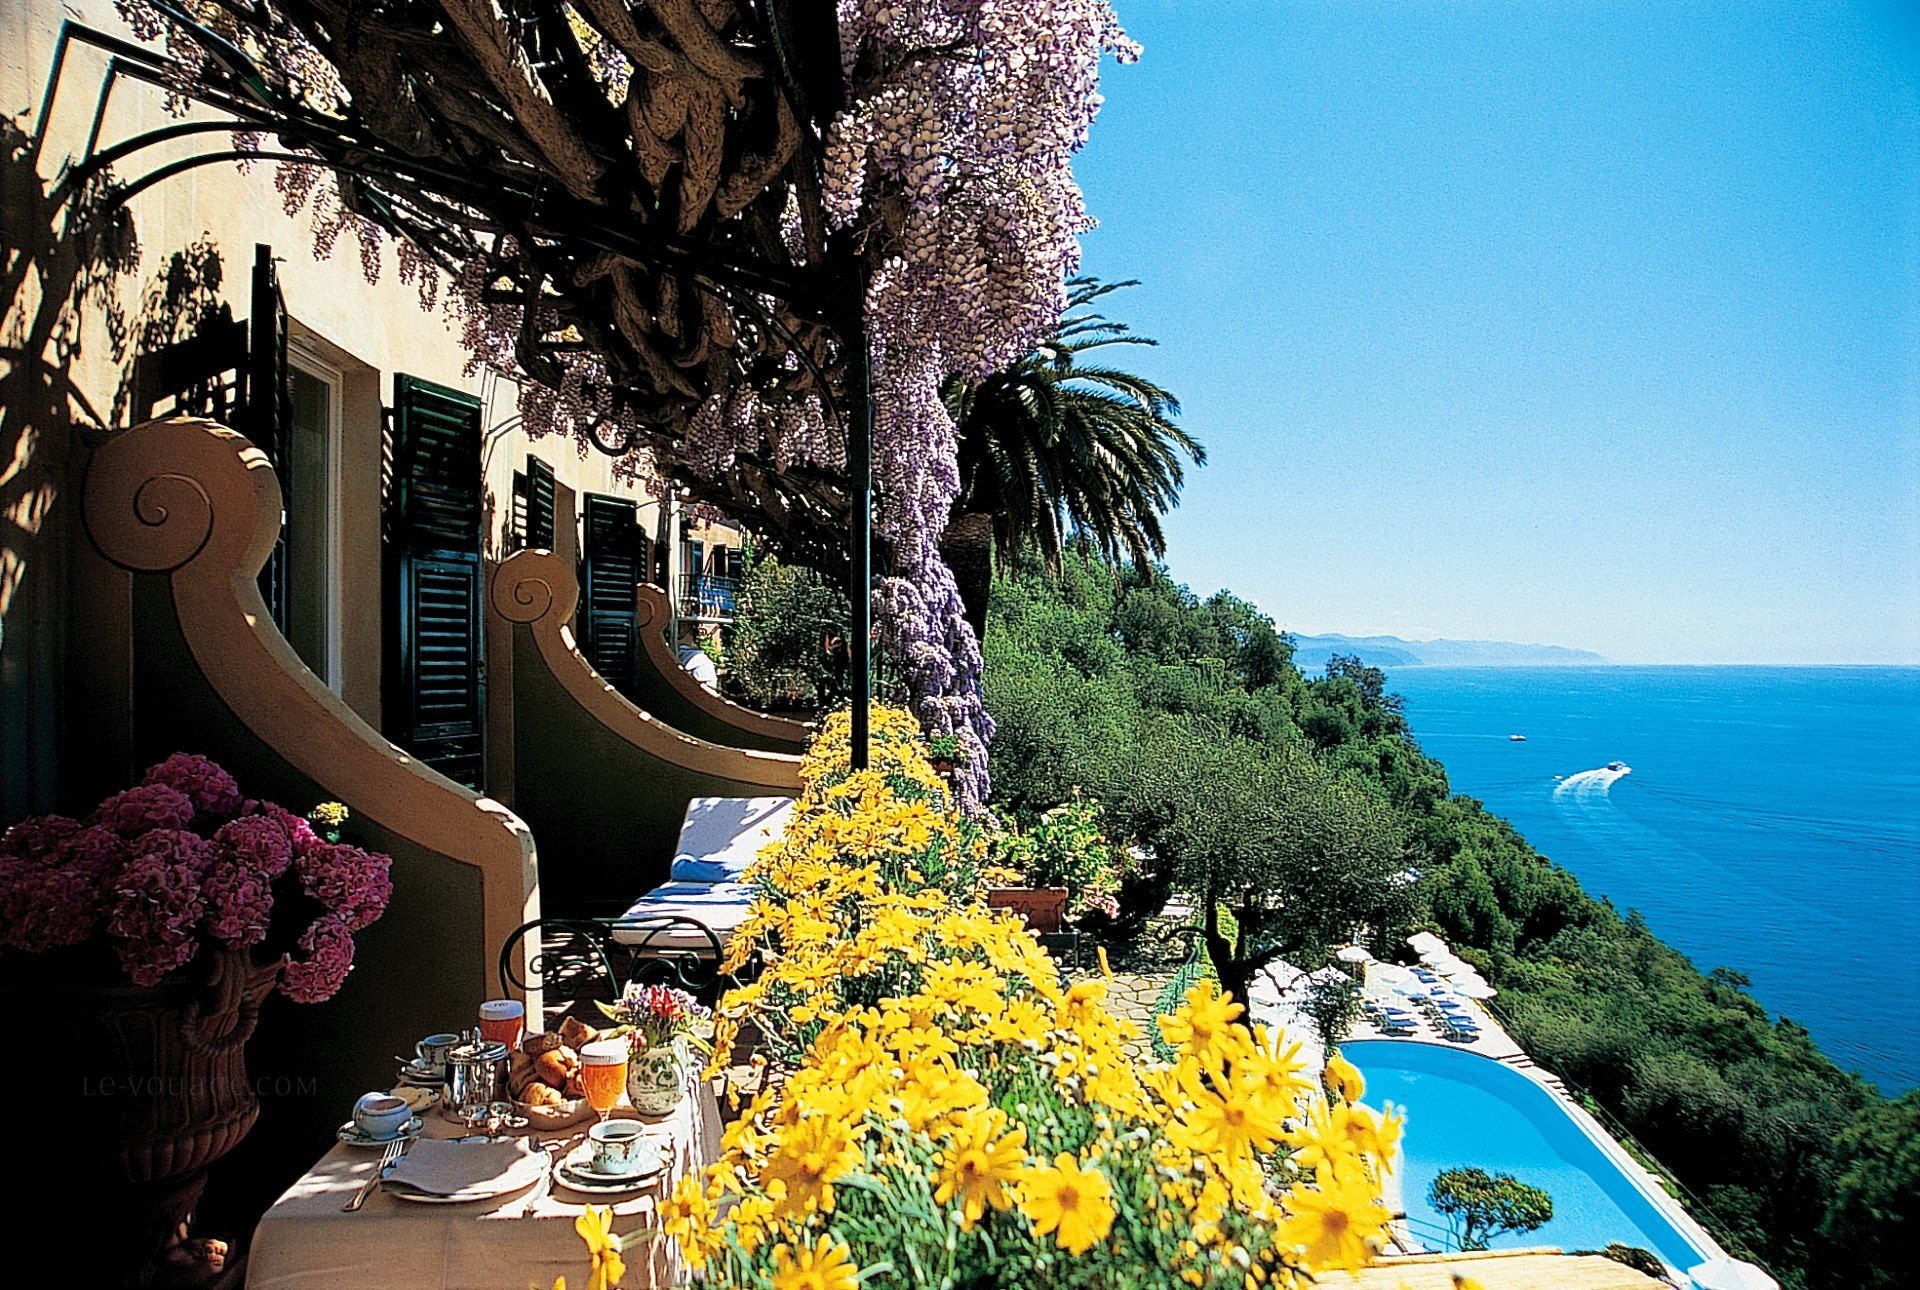 BELMOND HOTEL SPLENDIDO & BELMOND SPLENDIDO MARE in Portofino, Italy